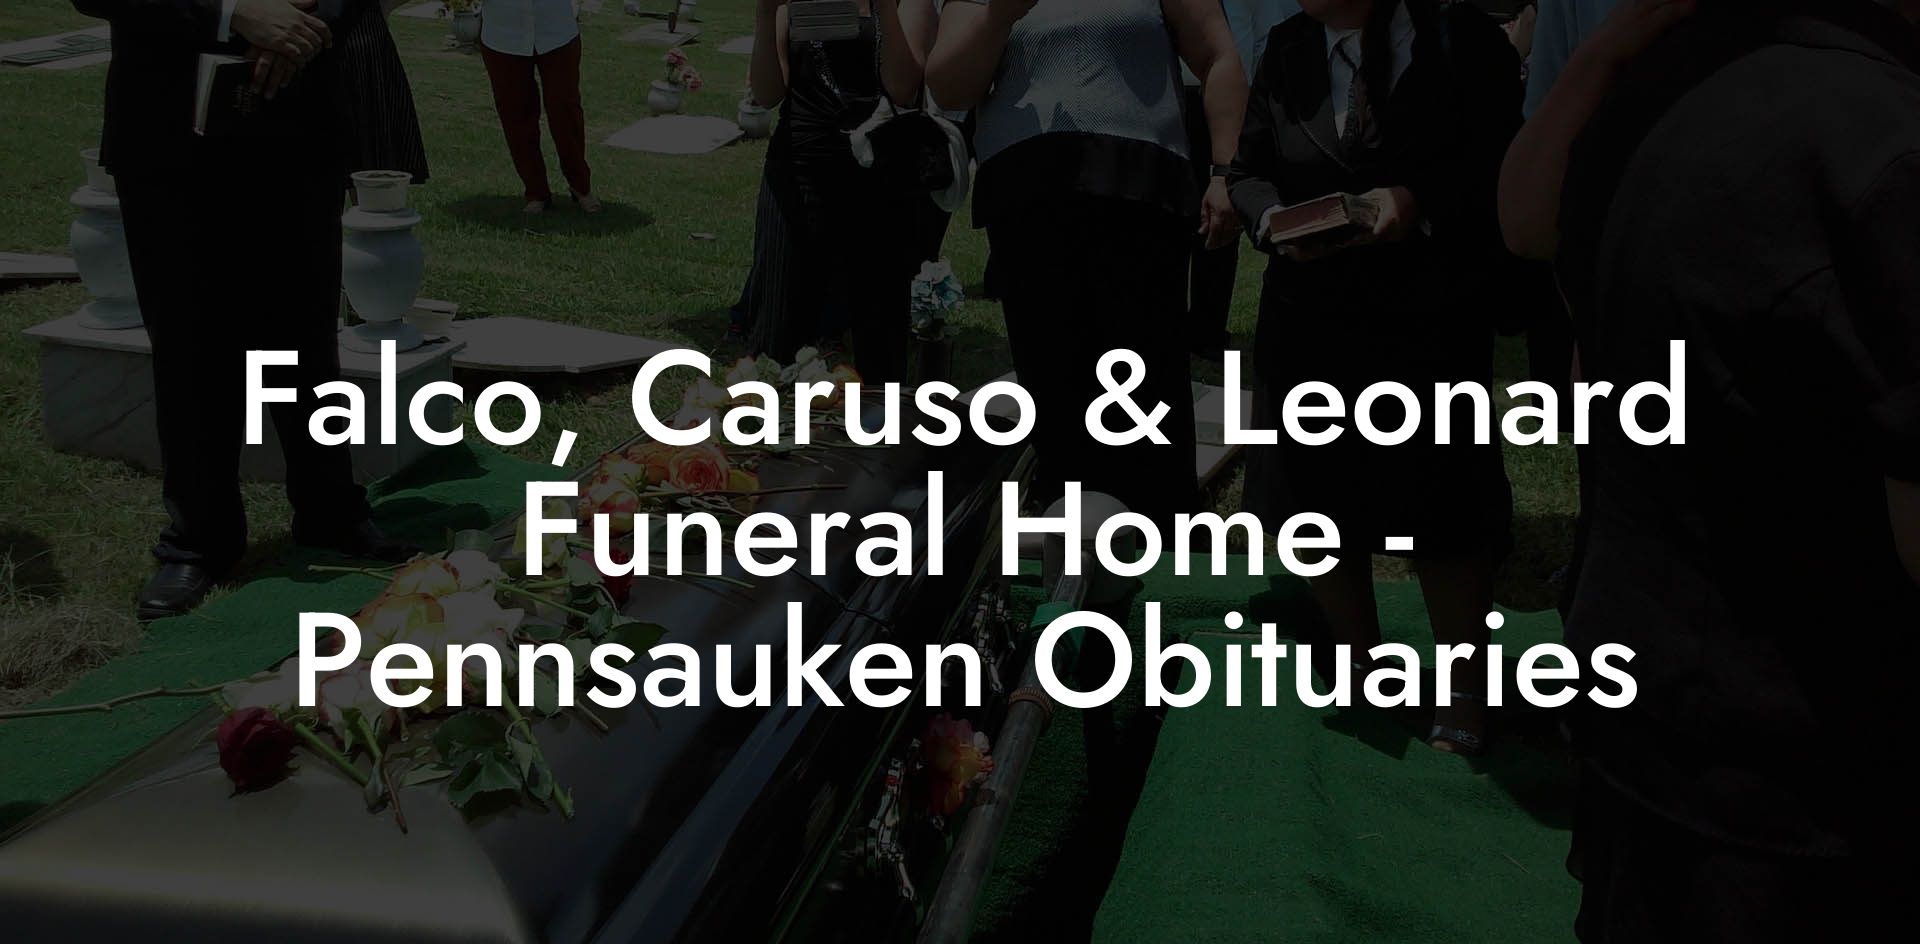 Falco, Caruso & Leonard Funeral Home - Pennsauken Obituaries